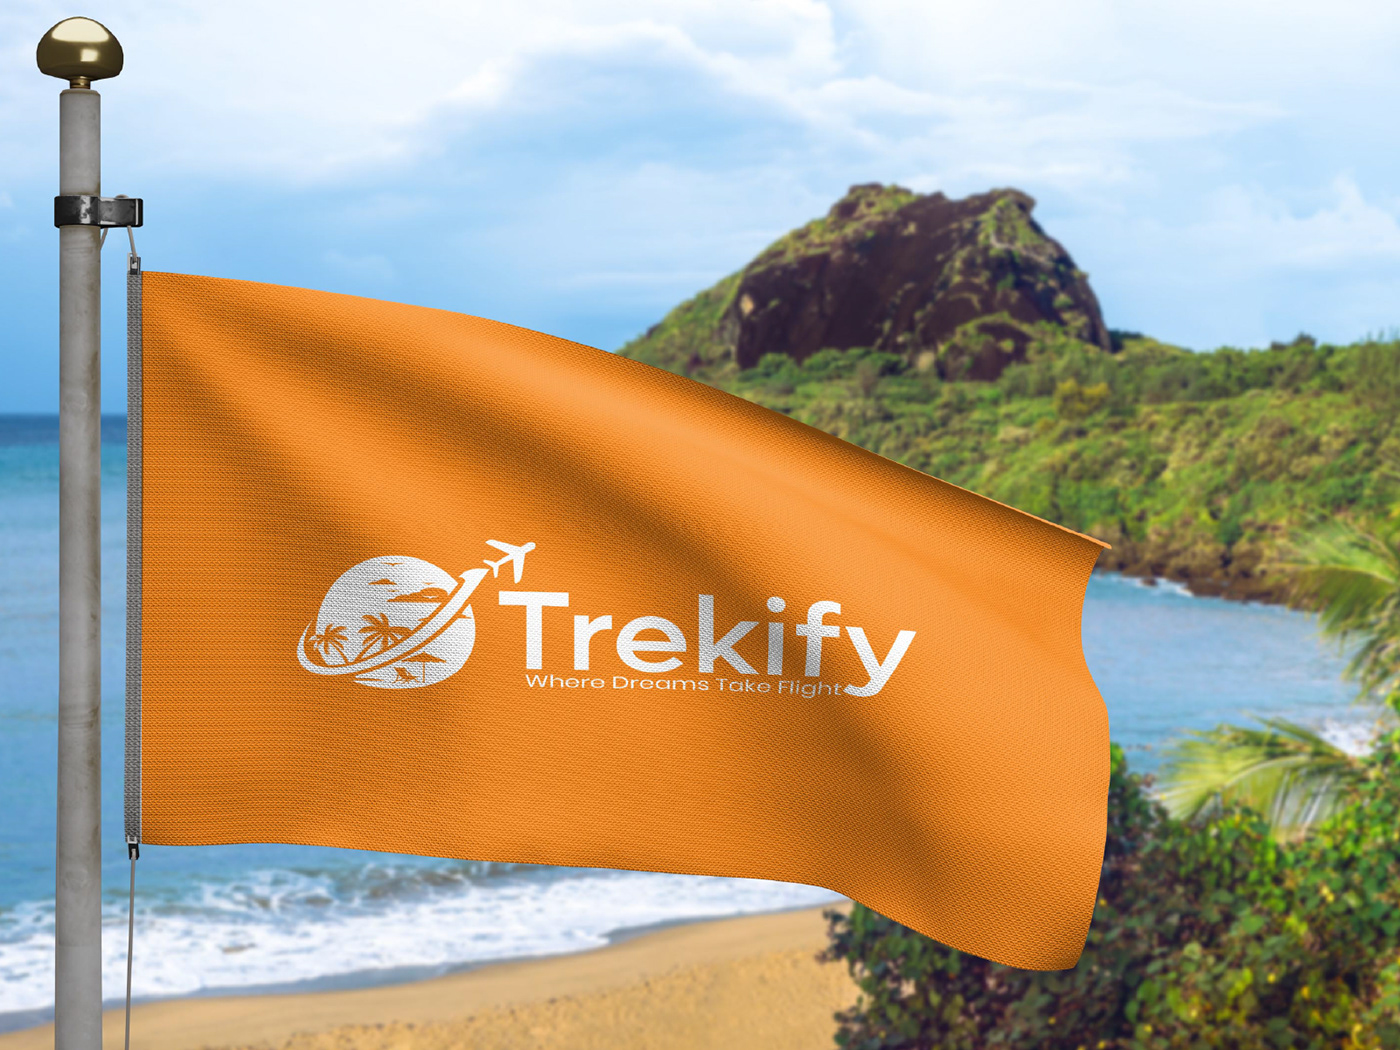 Trekify Traveling Logo Design And Branding 